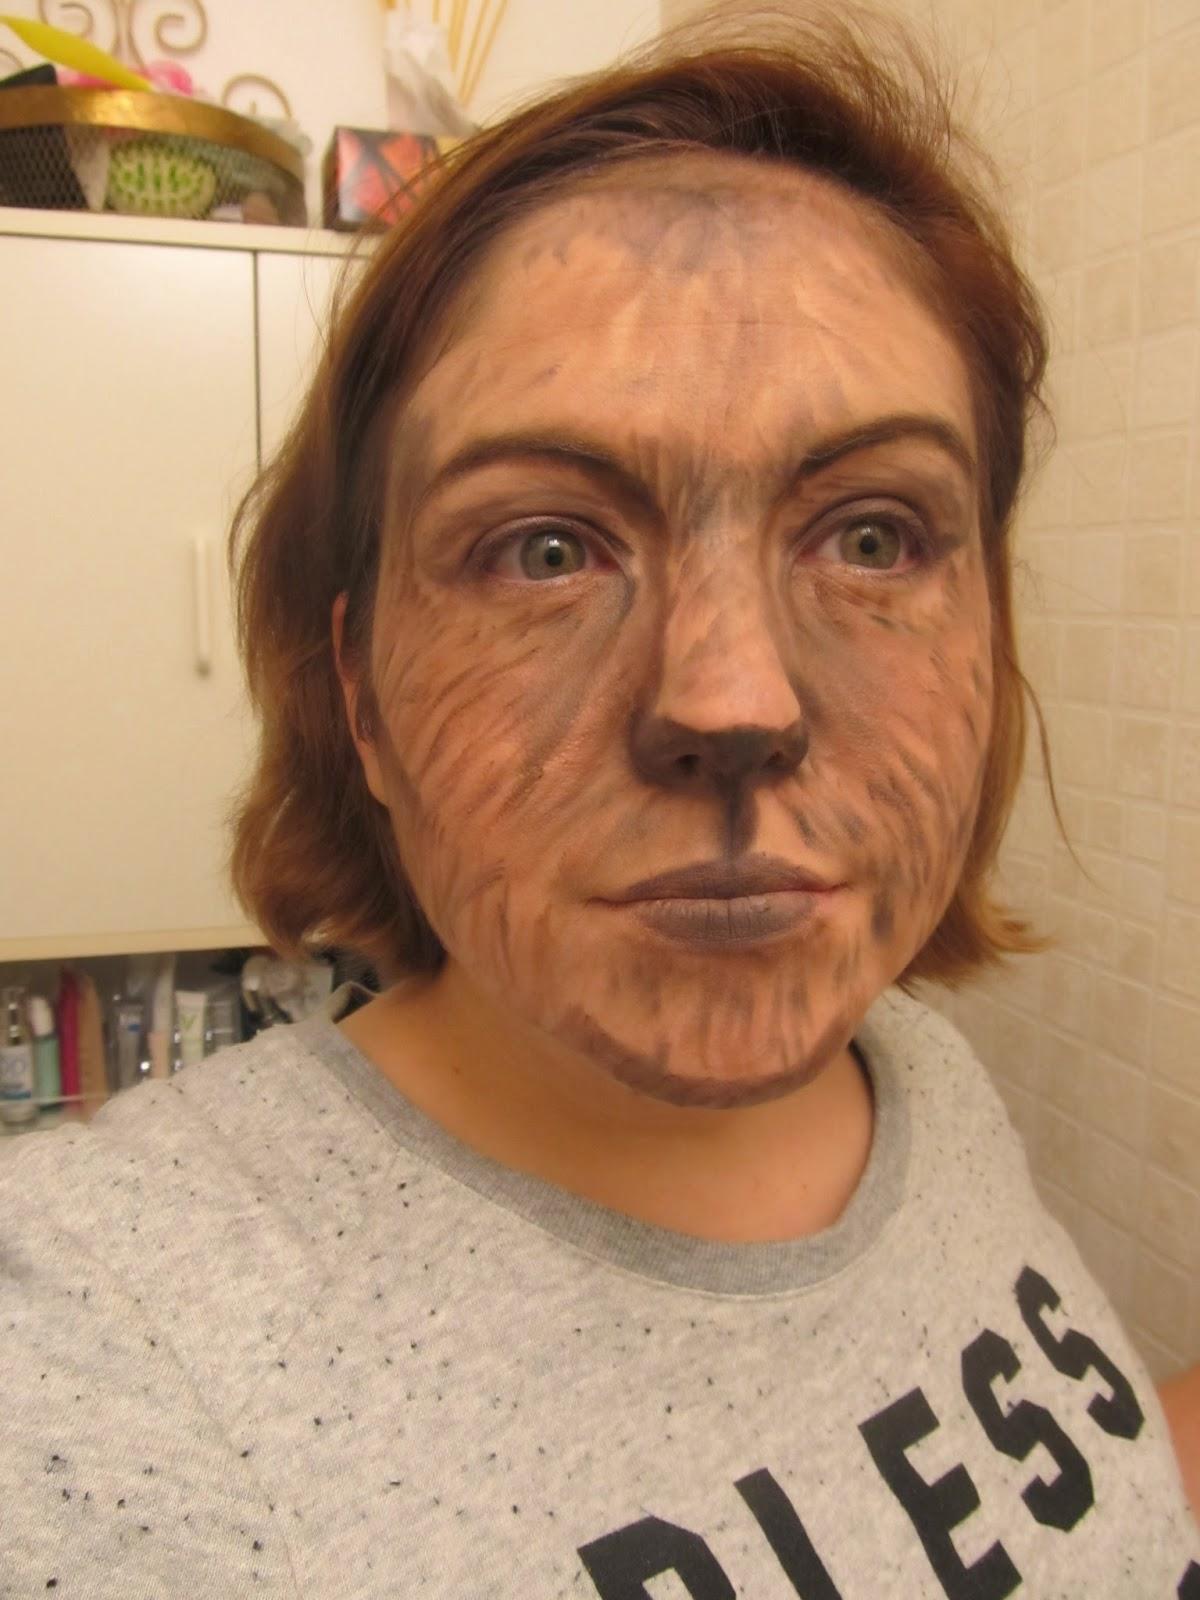 Maquillage Halloween: Loup Garou